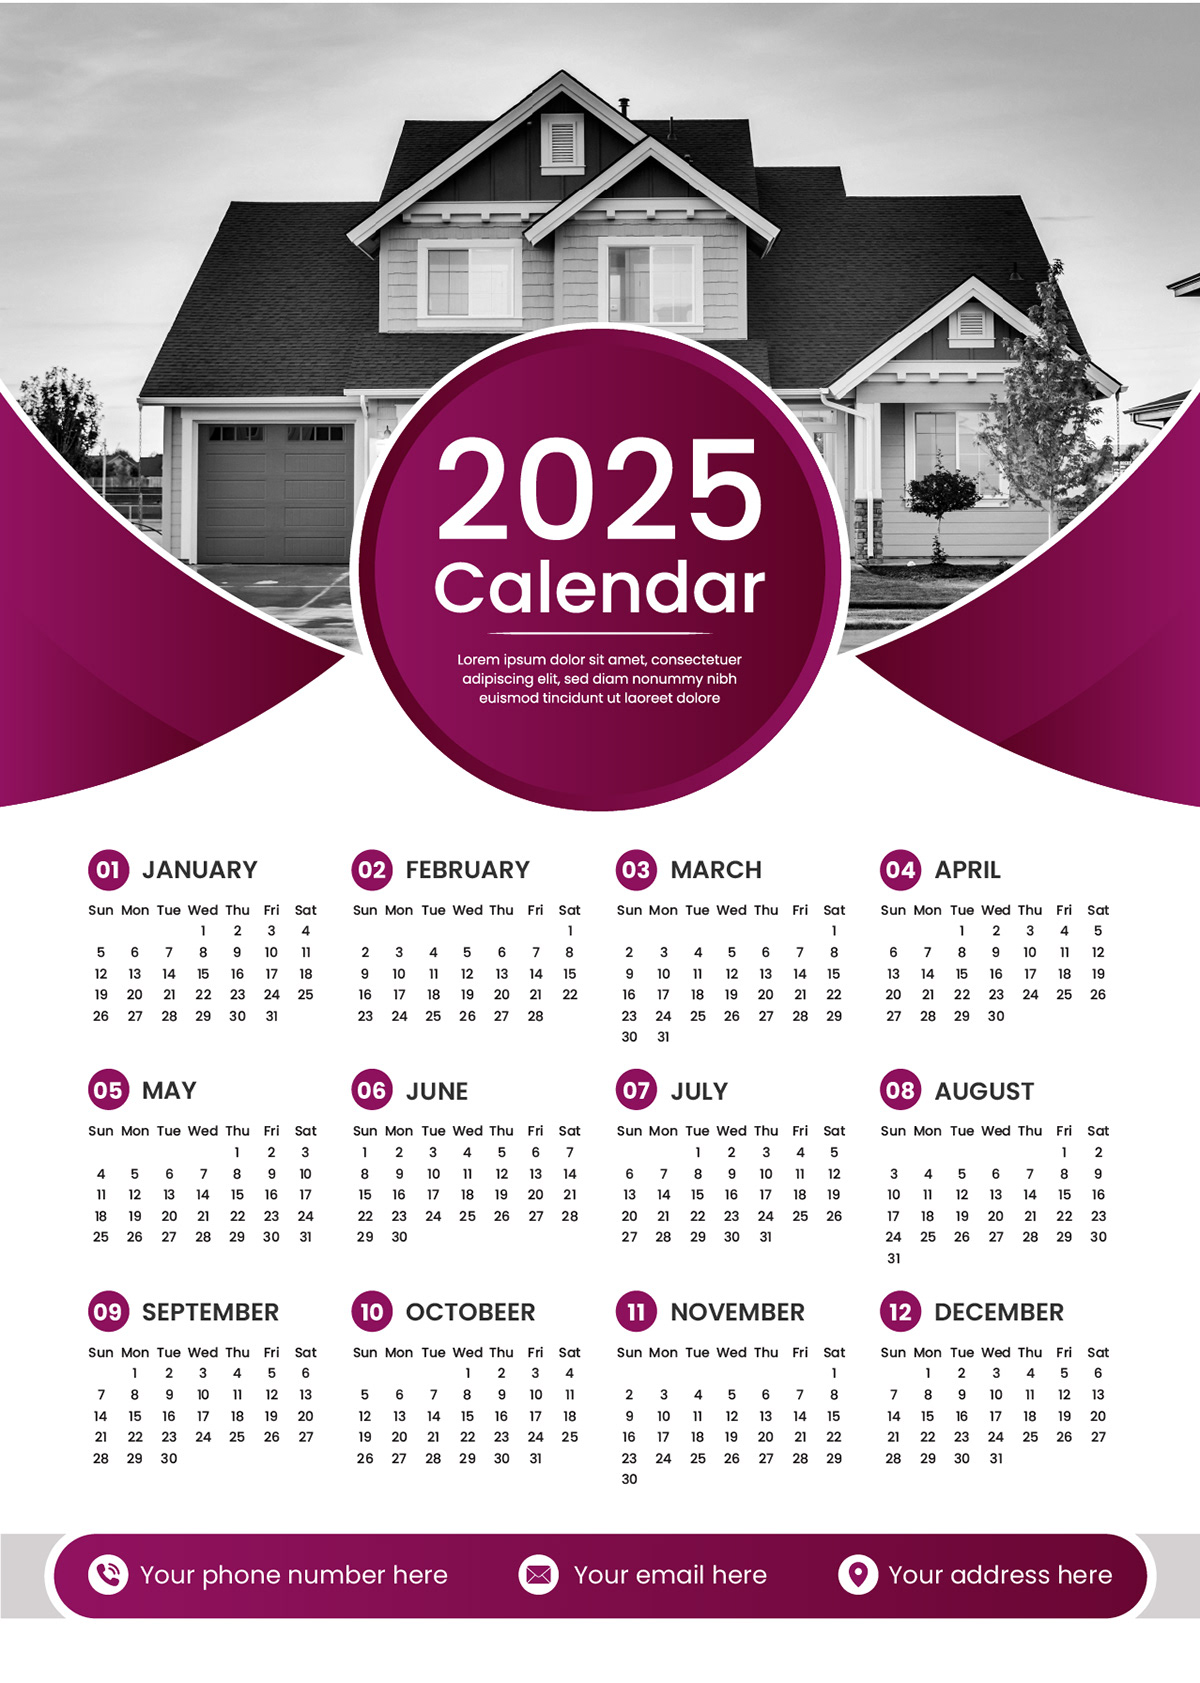 2025 calendar calendar 2025 wall calendar new year happy new year card desk calendar corporate wall wall calendar design